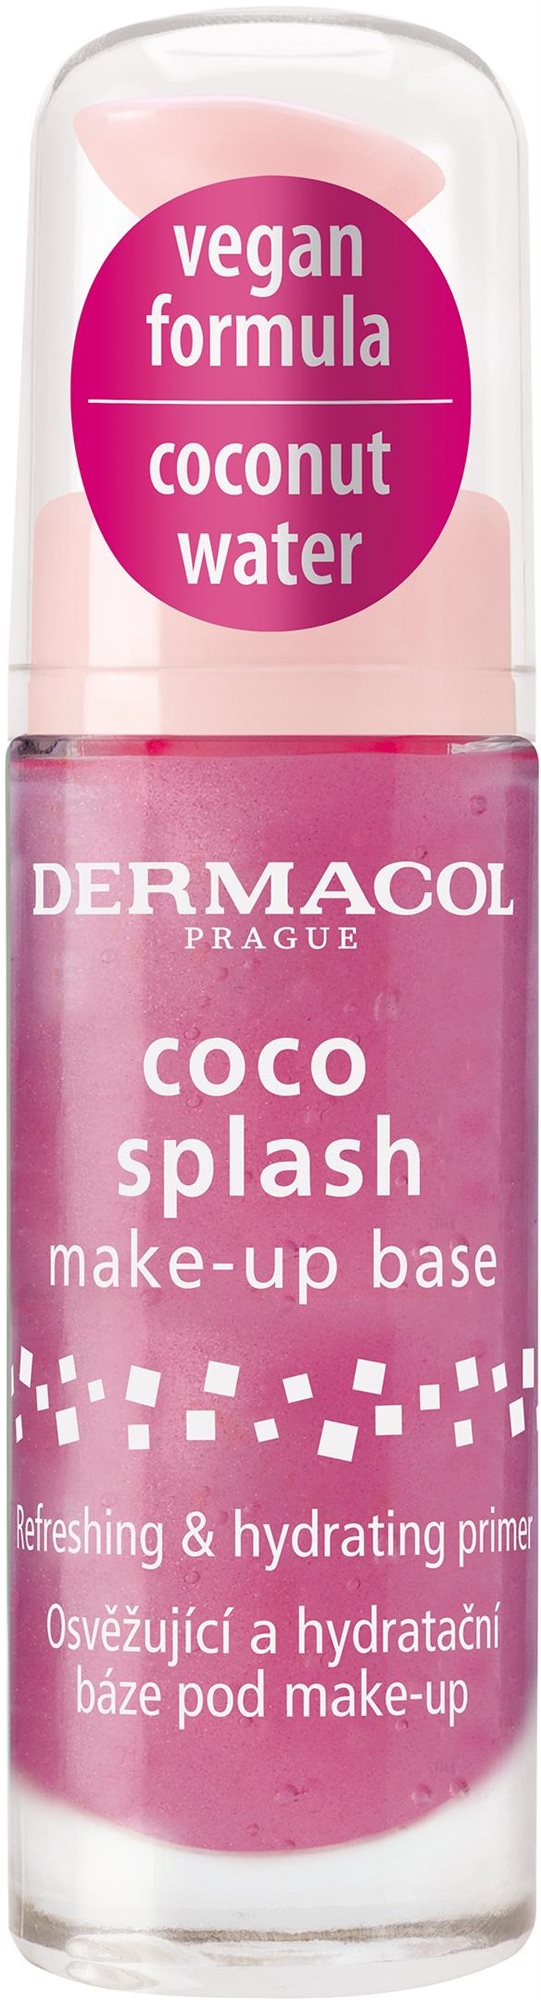 Primer DERMACOL Coco splash make-up base 20 ml